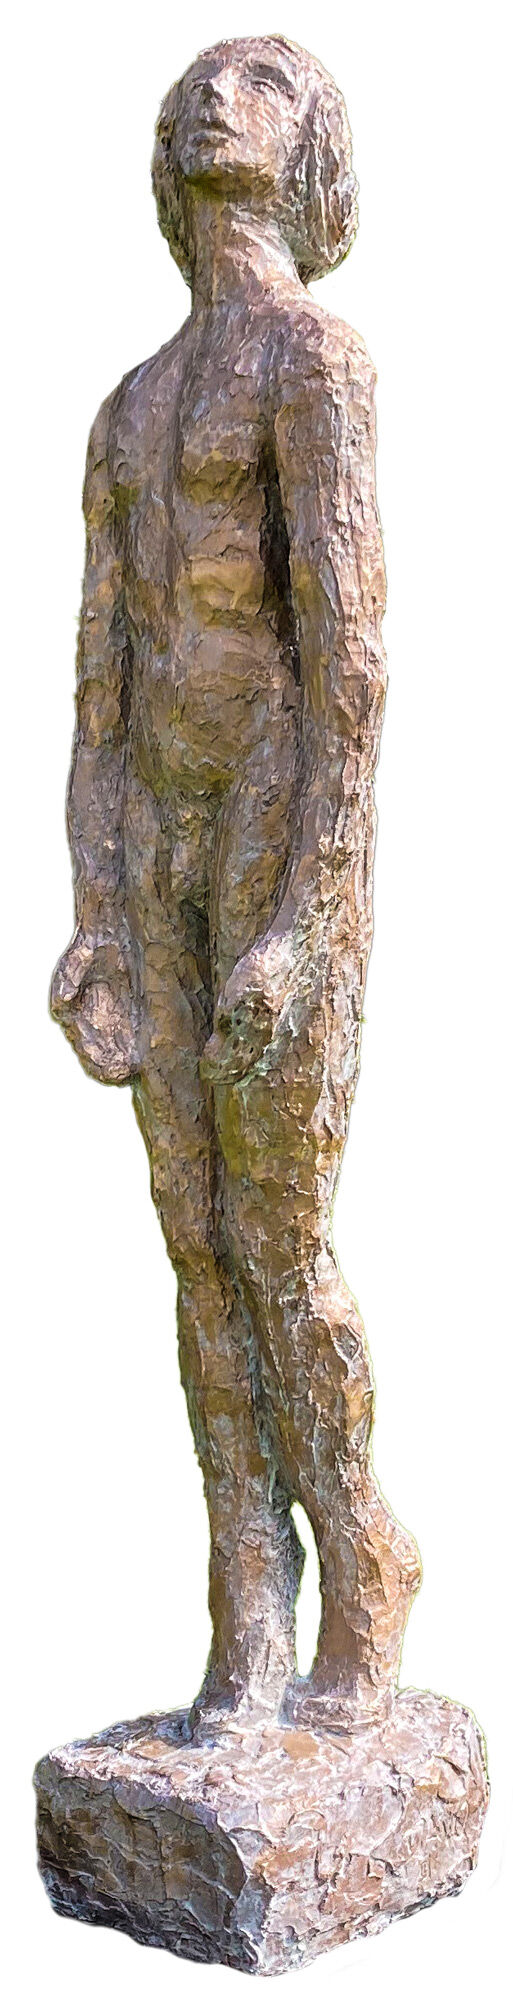 Sculpture "Pina - Full Moon" (2019), bronze von Dagmar Vogt